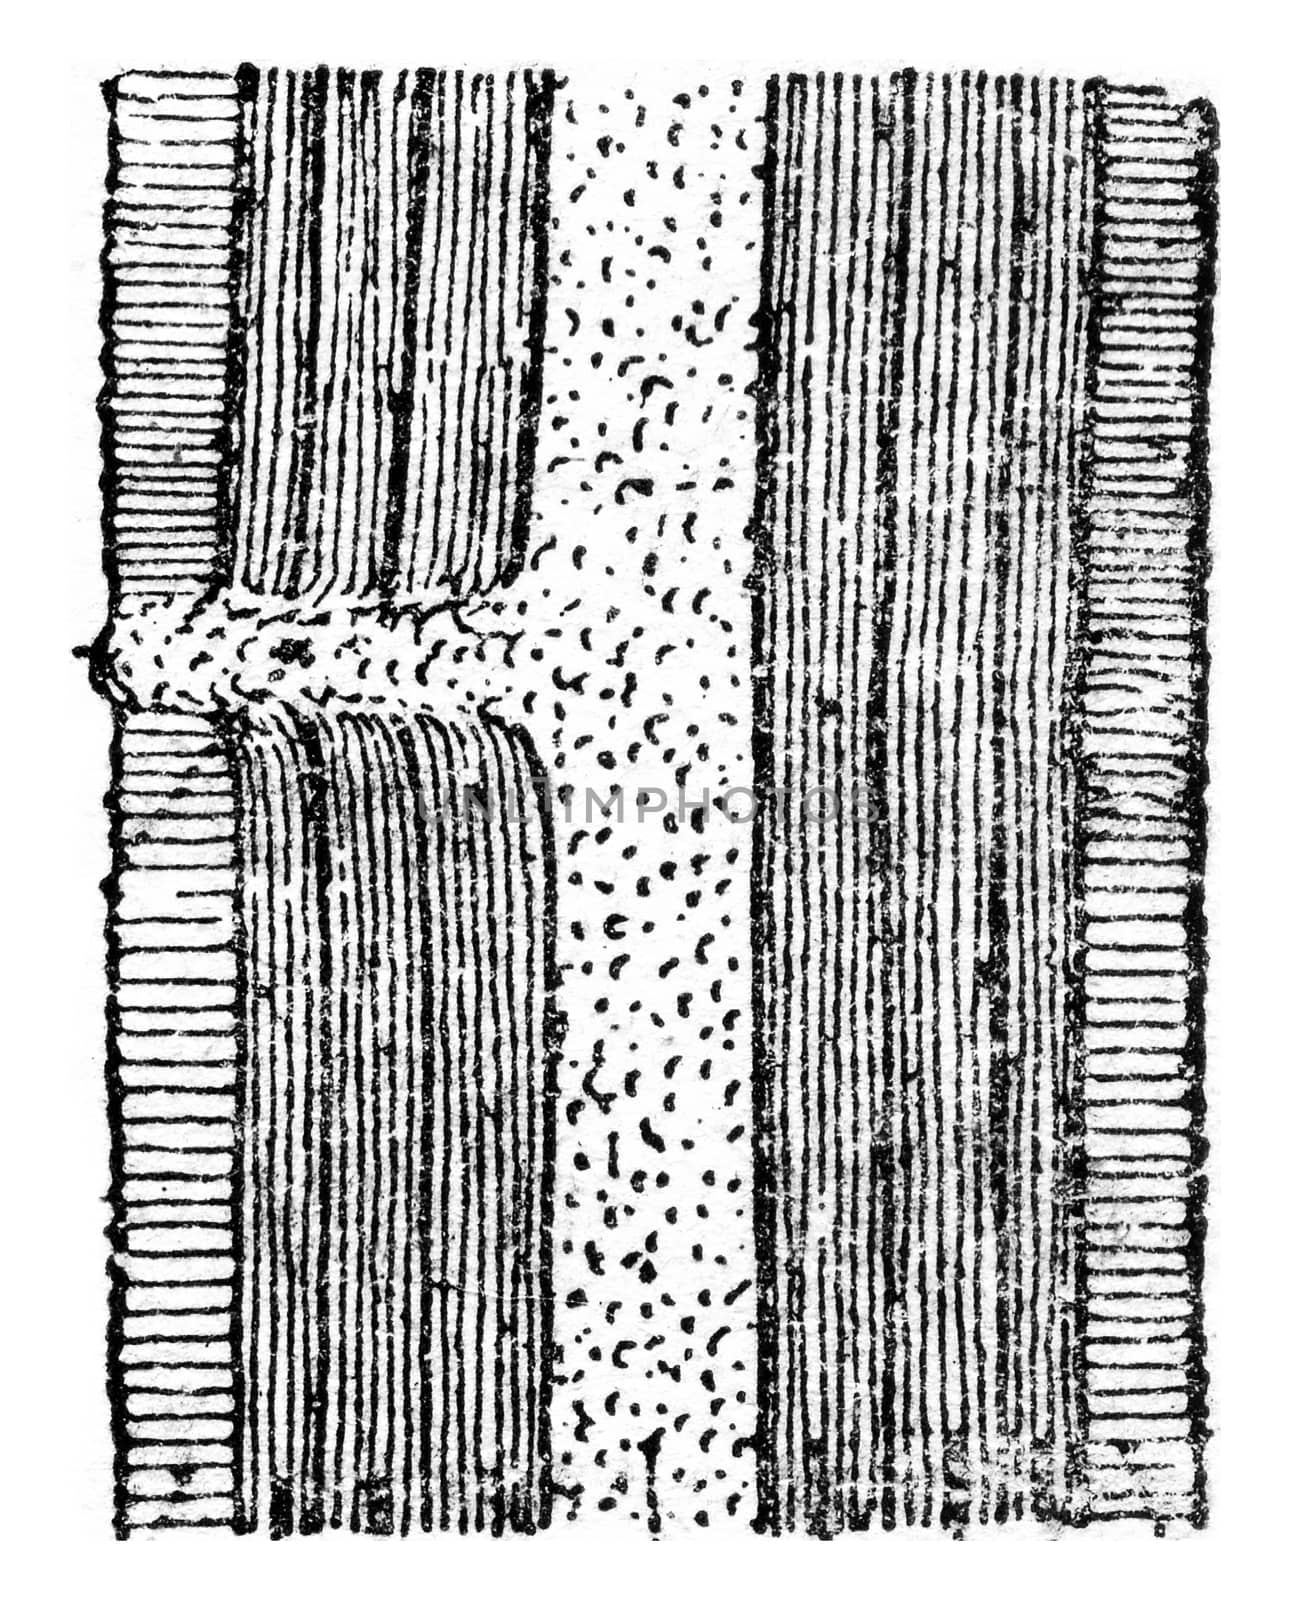 Schematic longitudinal section showing a dormant bud, vintage en by Morphart